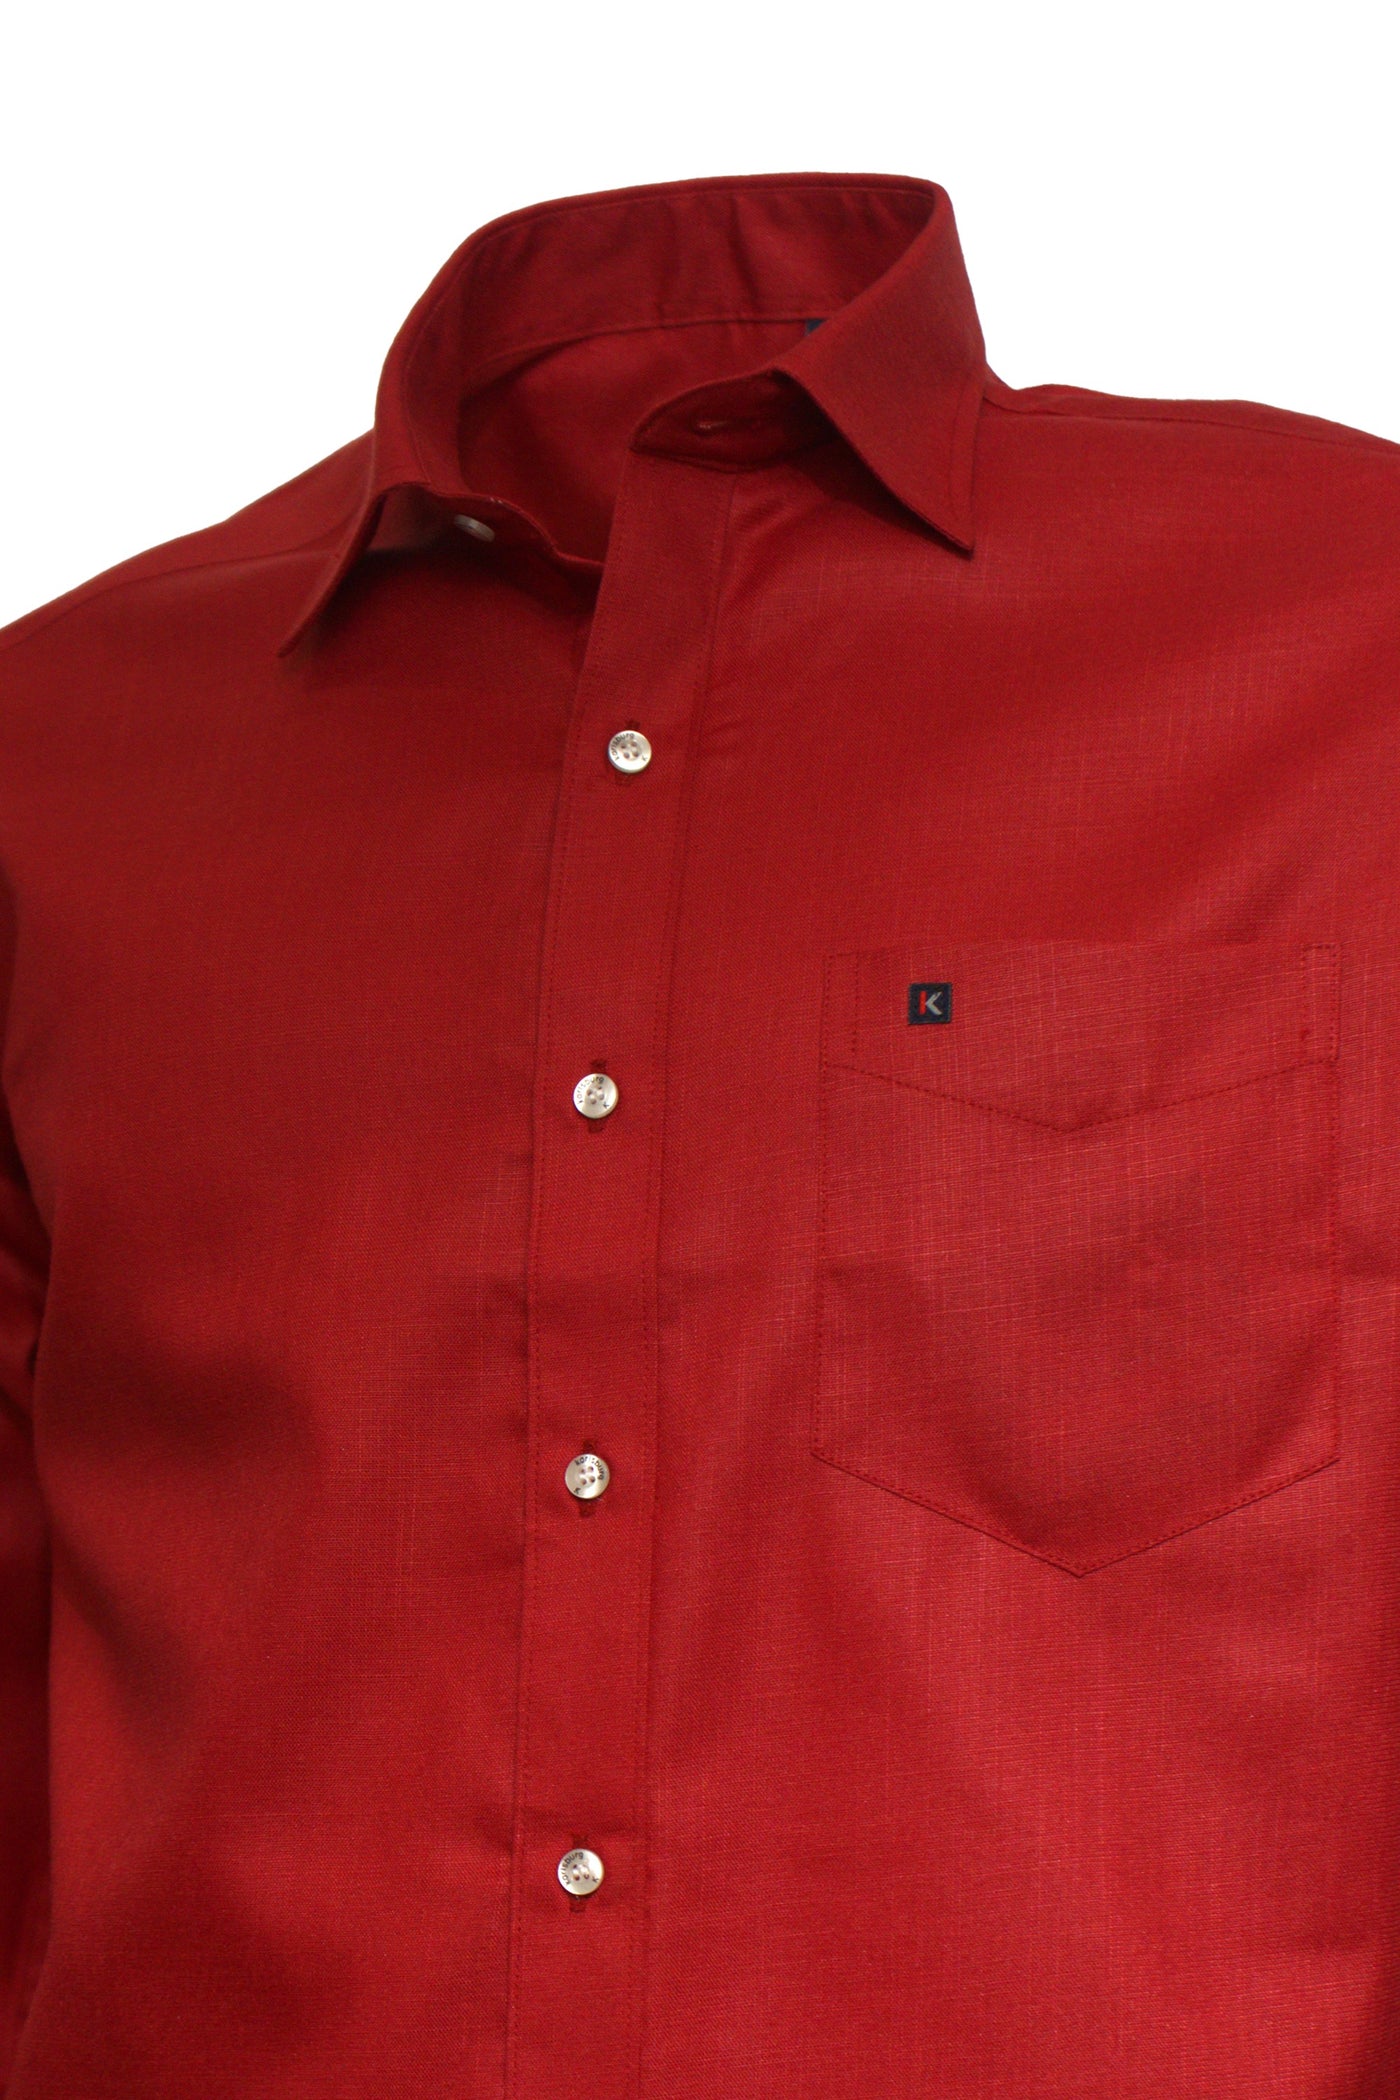 Men's Ruby Red Shirt